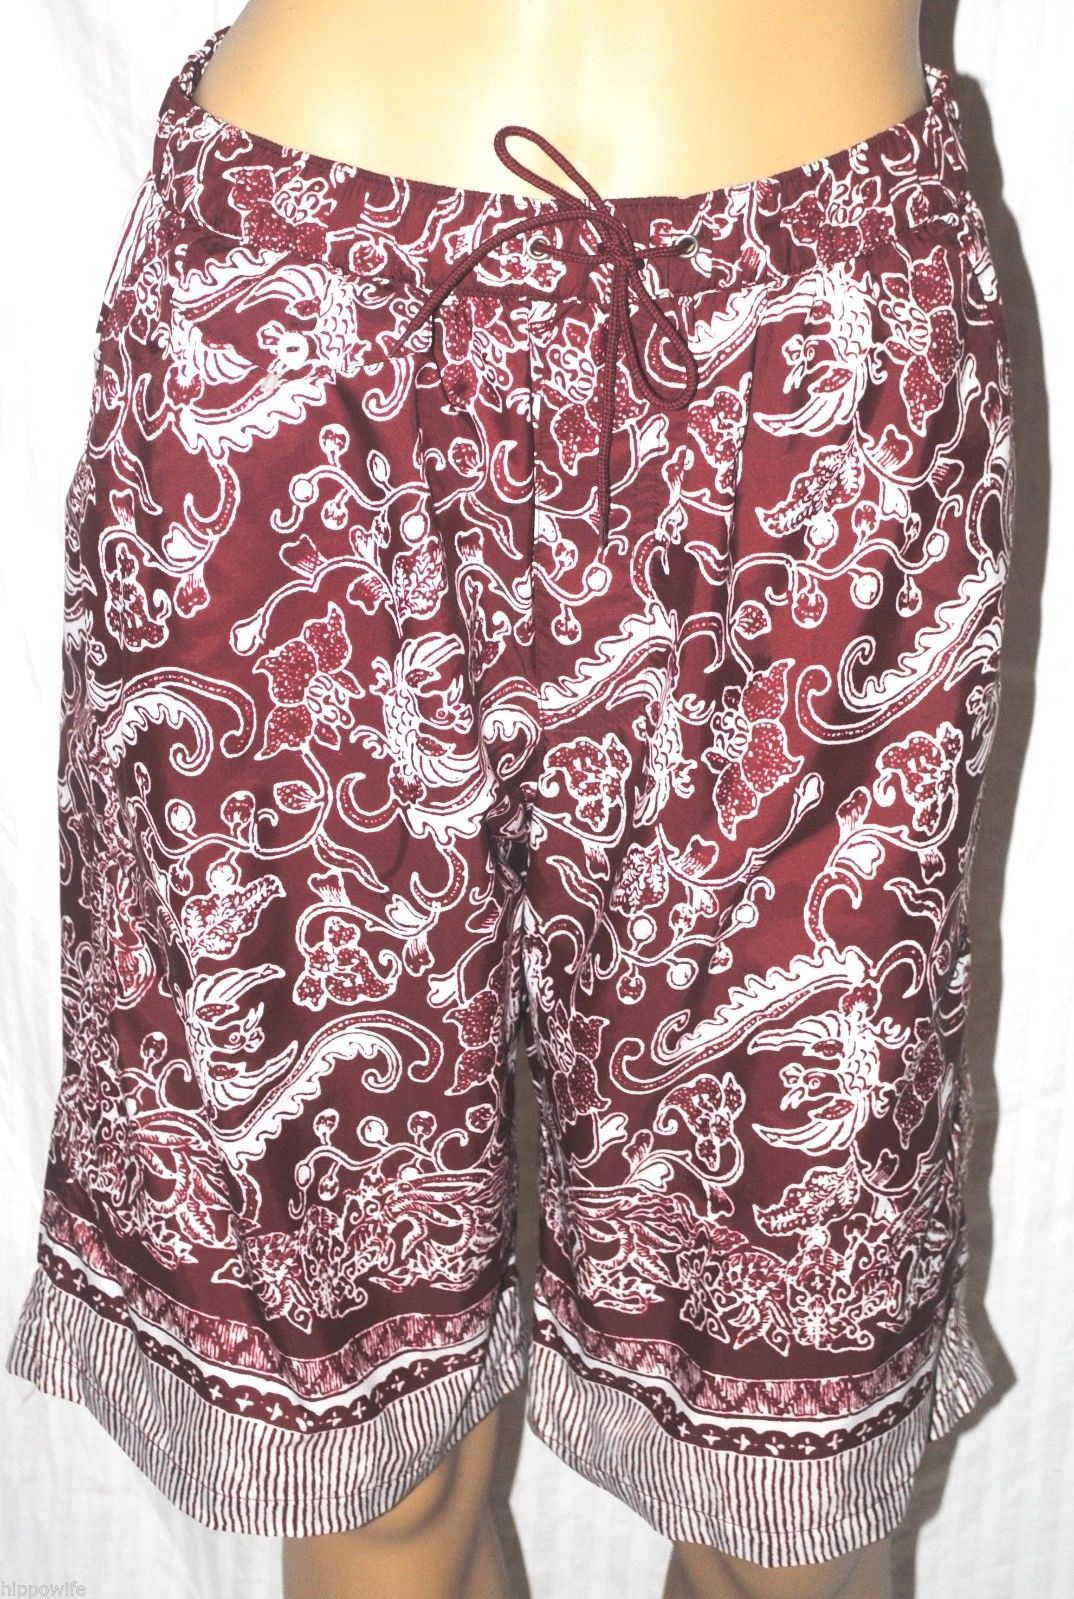 Dolce & Gabbana Men's Swim Trunks Board Shorts NWT $300 retail (pb113) - $49.49